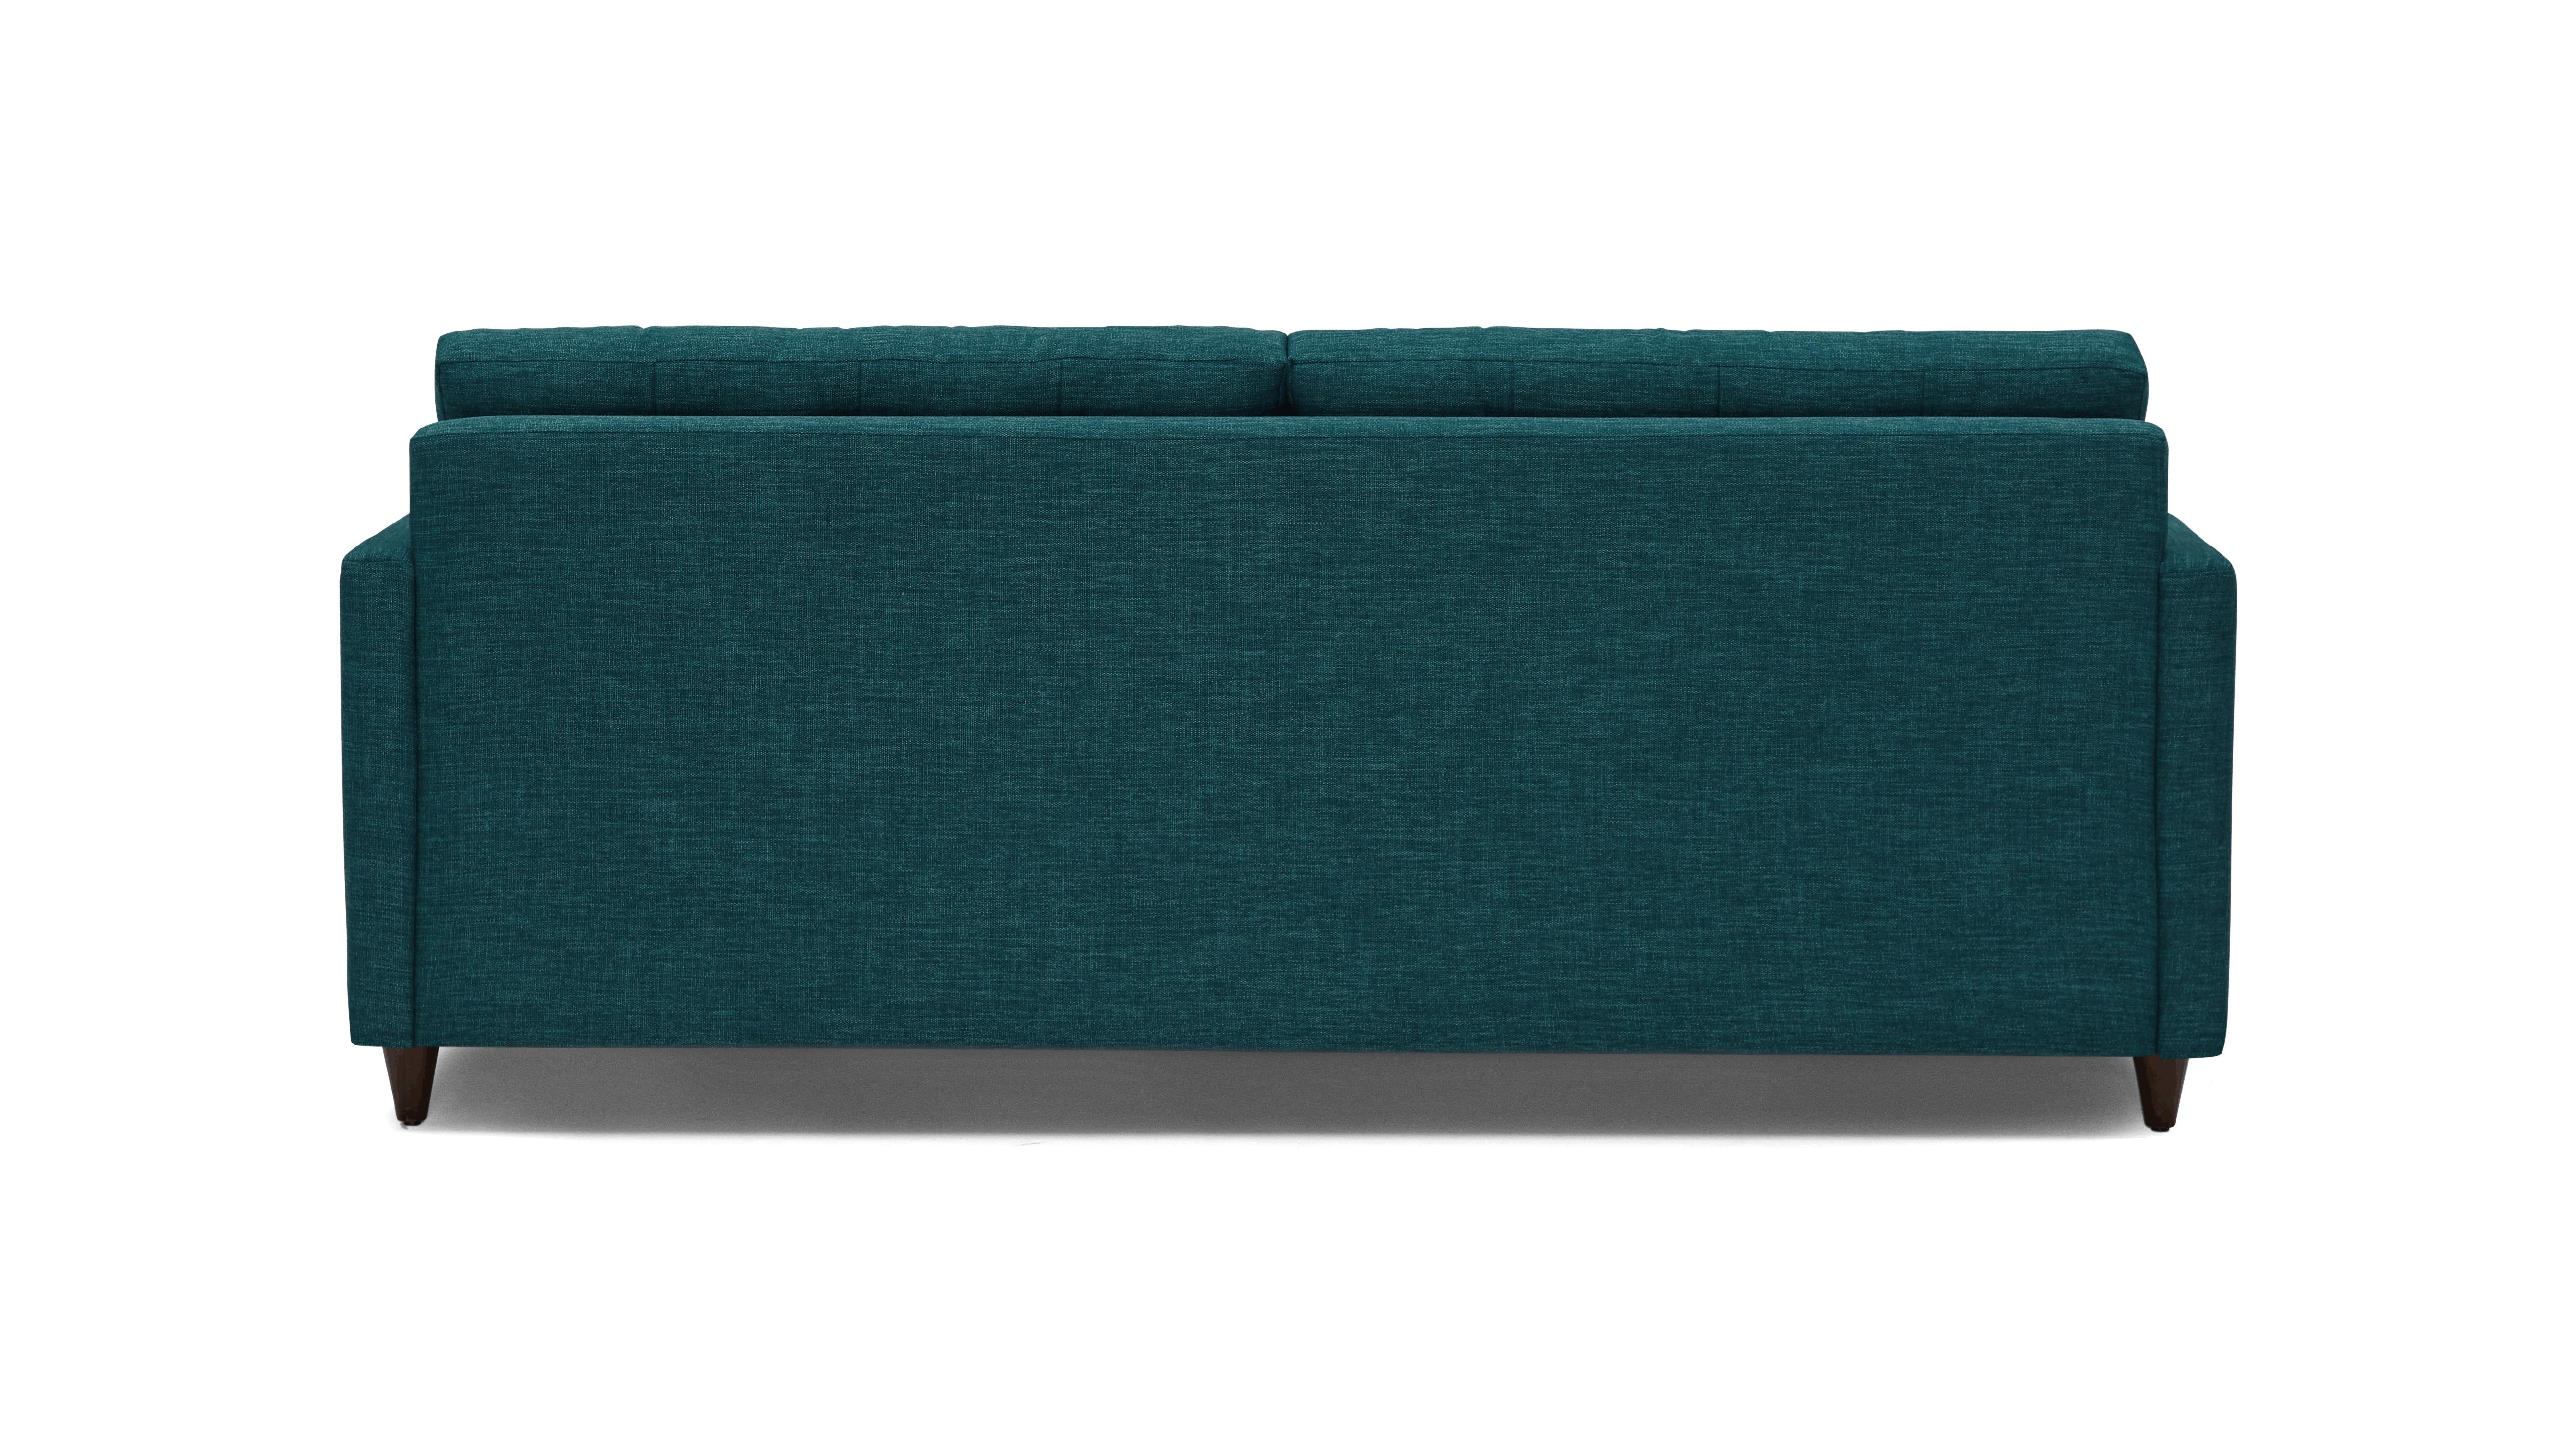 Blue Eliot Mid Century Modern Sleeper Sofa - Key Largo Zenith Teal - Mocha - Foam - Image 4